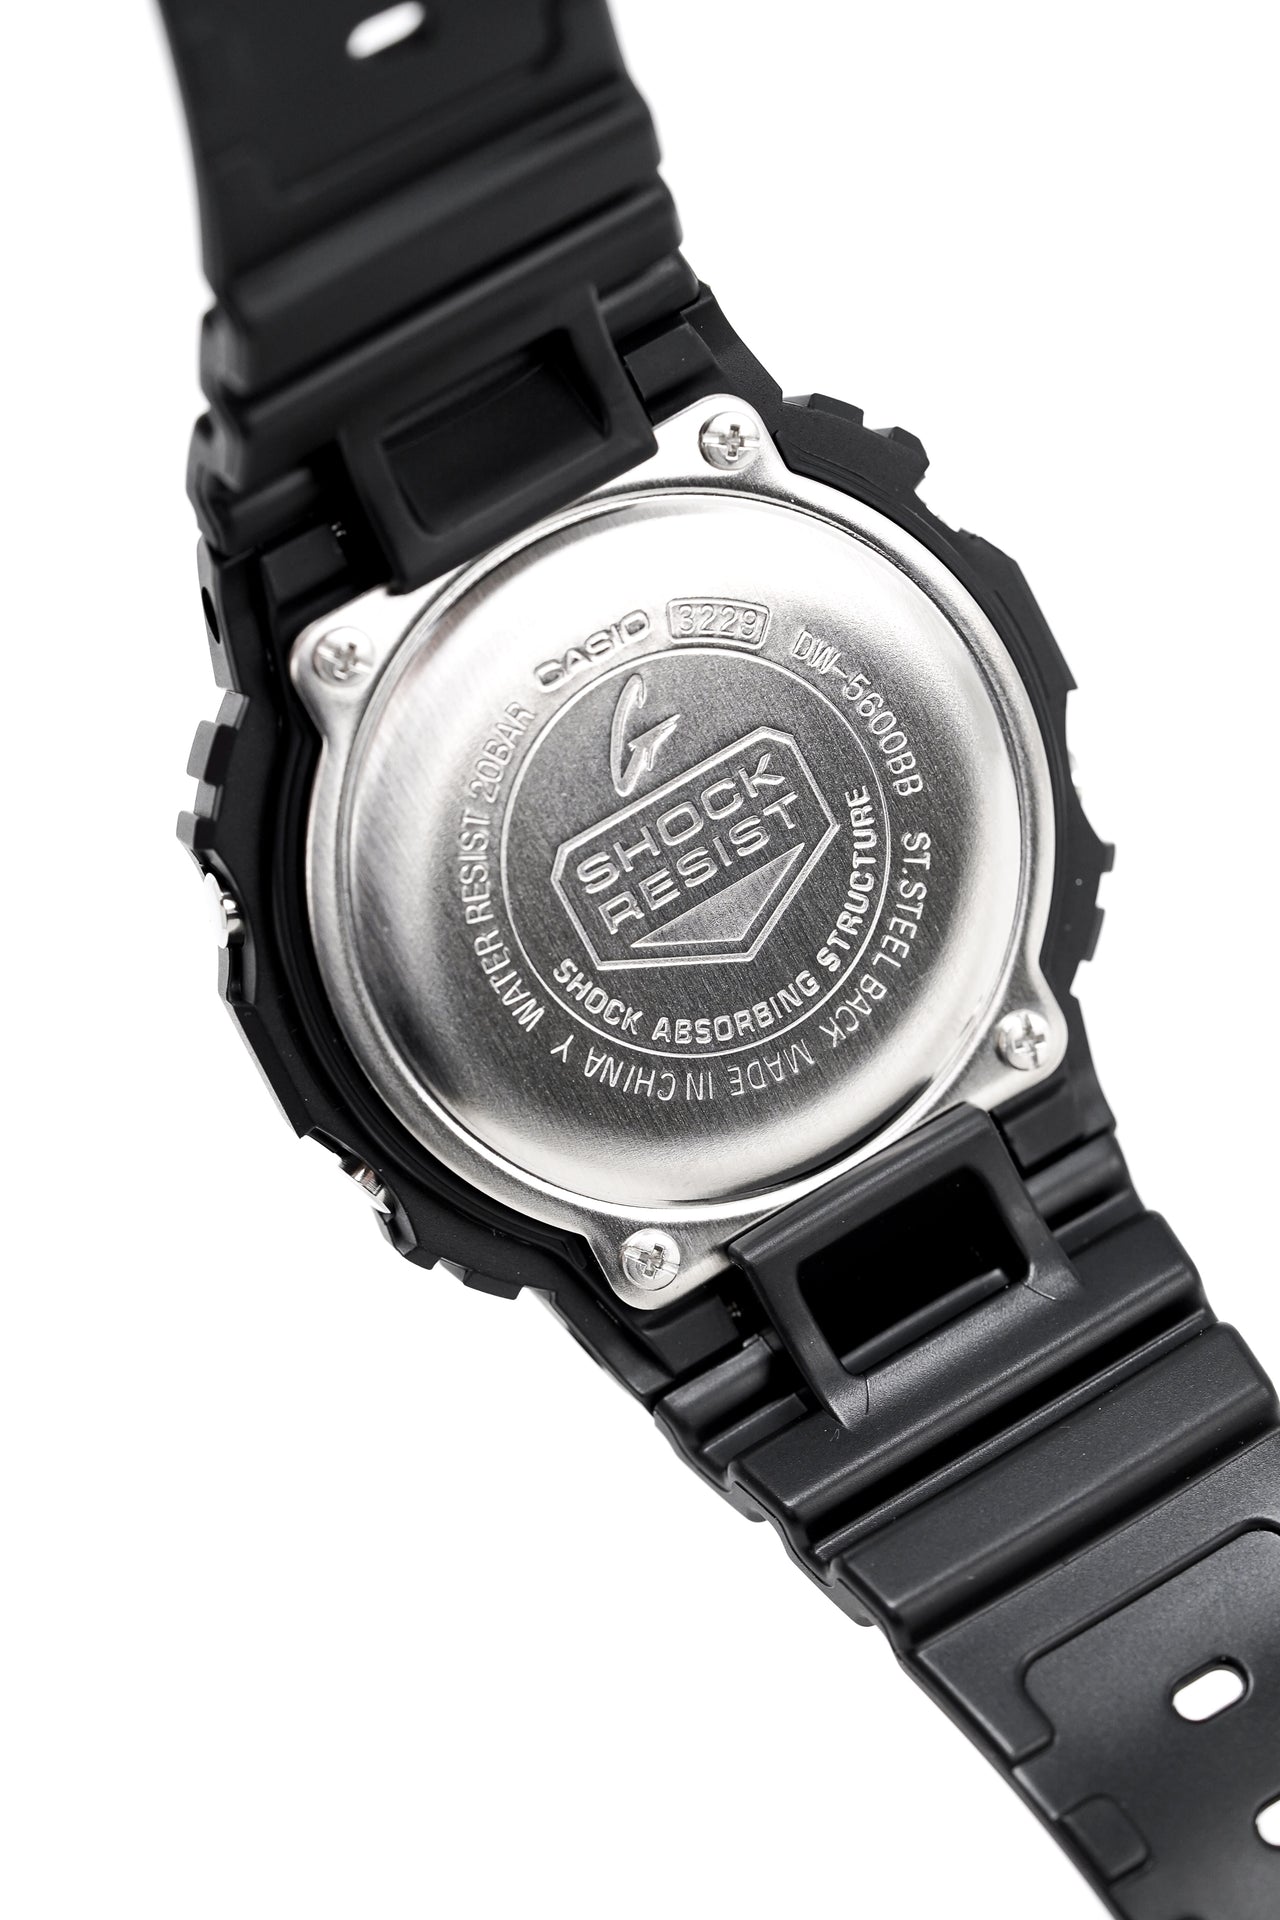 DW5600BB-1, Digital Black Men's Watch G-SHOCK